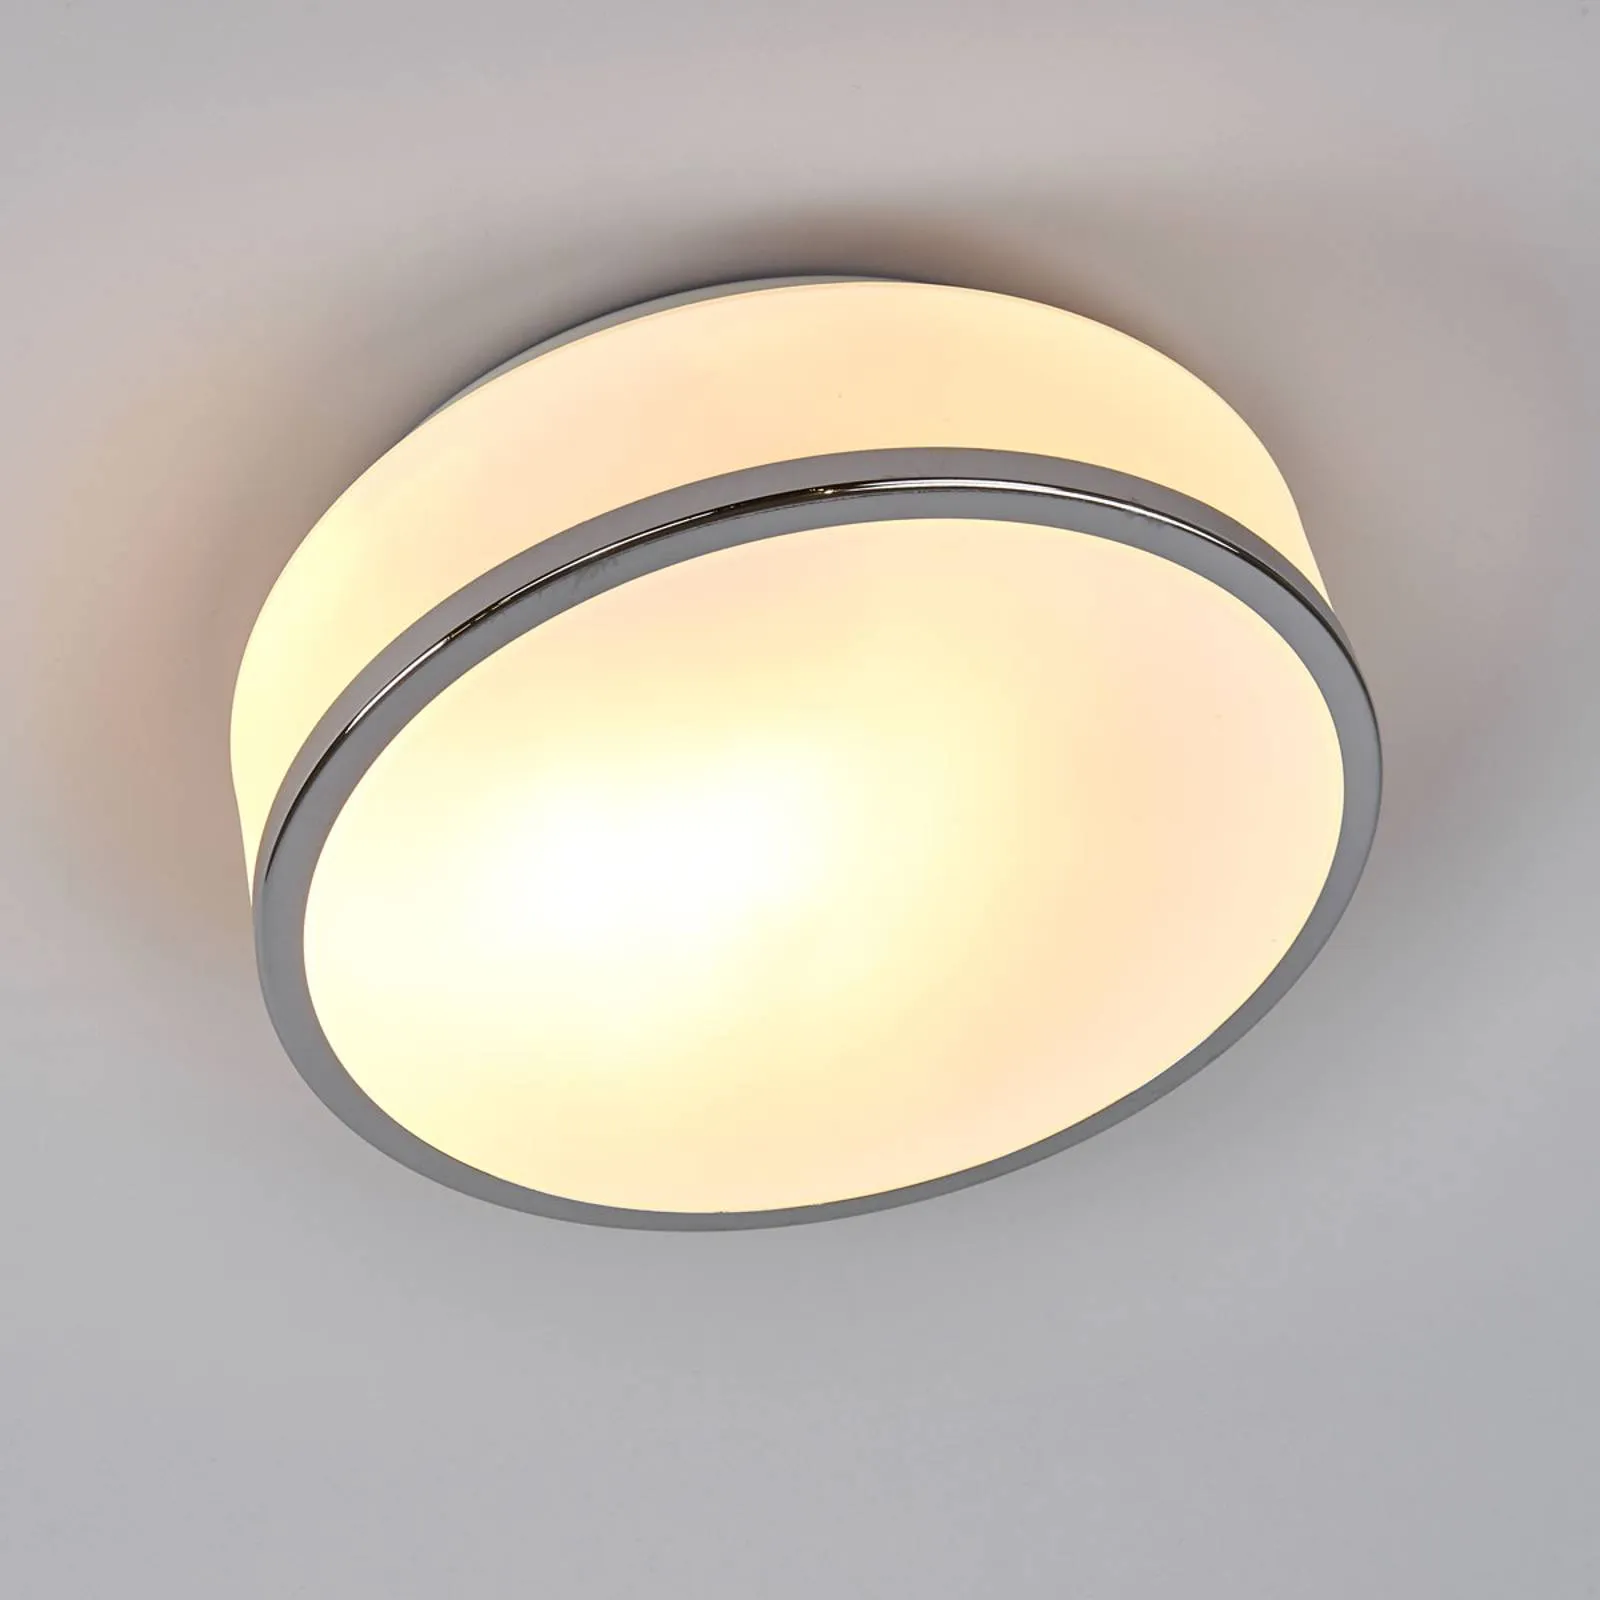 Flush ceiling light IP44, Ø 28 cm, satin silver